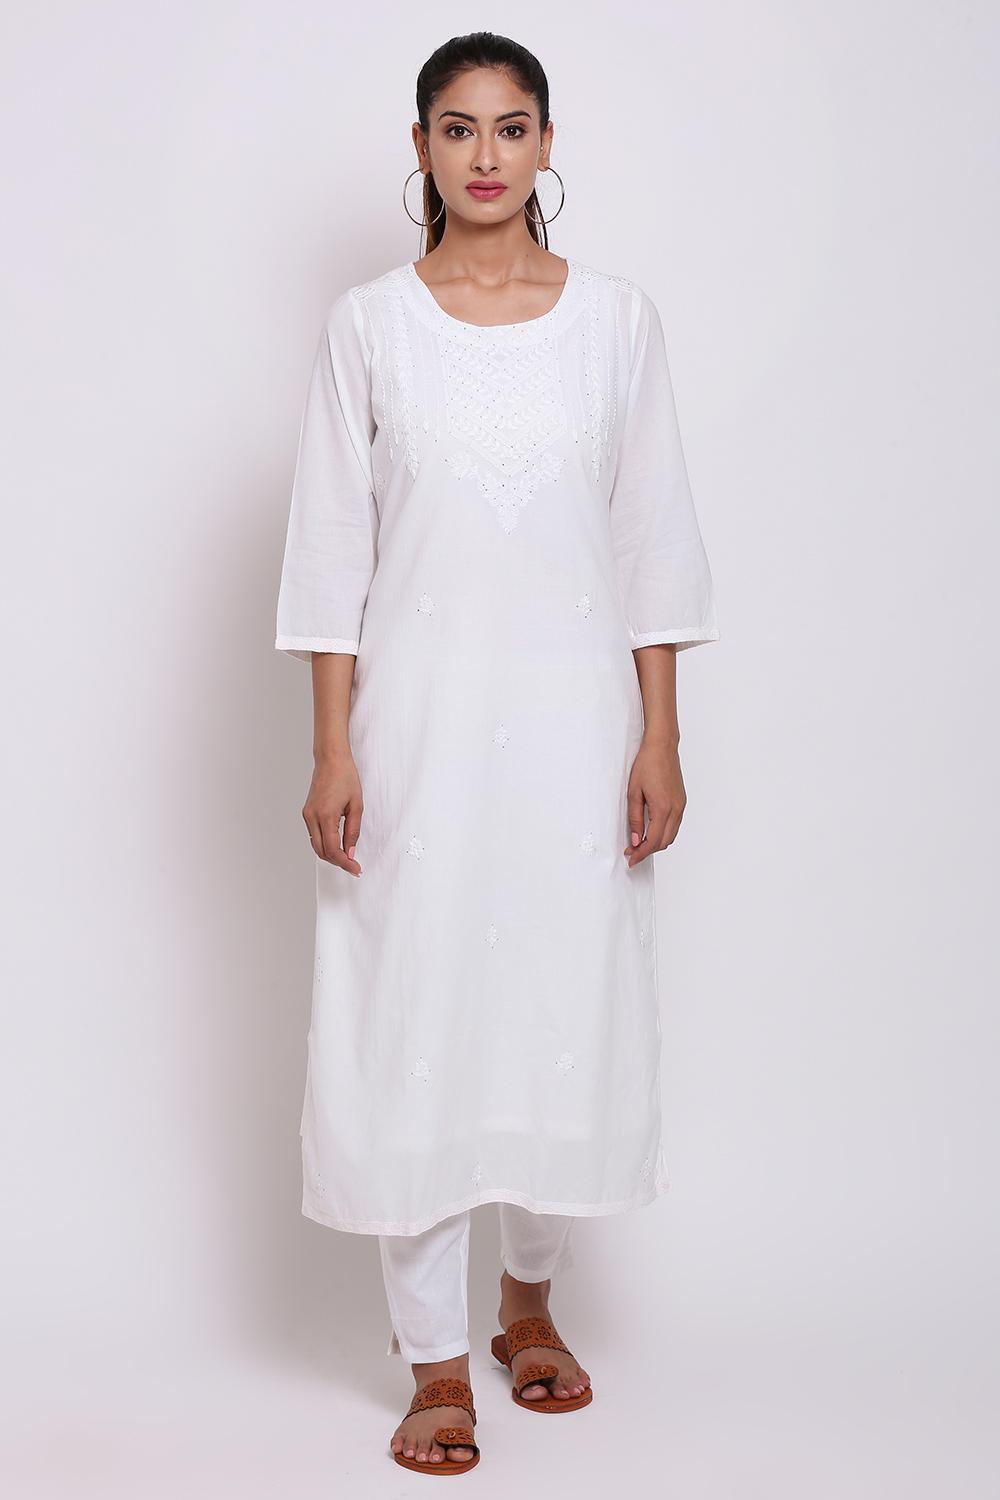 Buy Online White Cotton Straight Kurta for Women & Girls at Best Prices ...